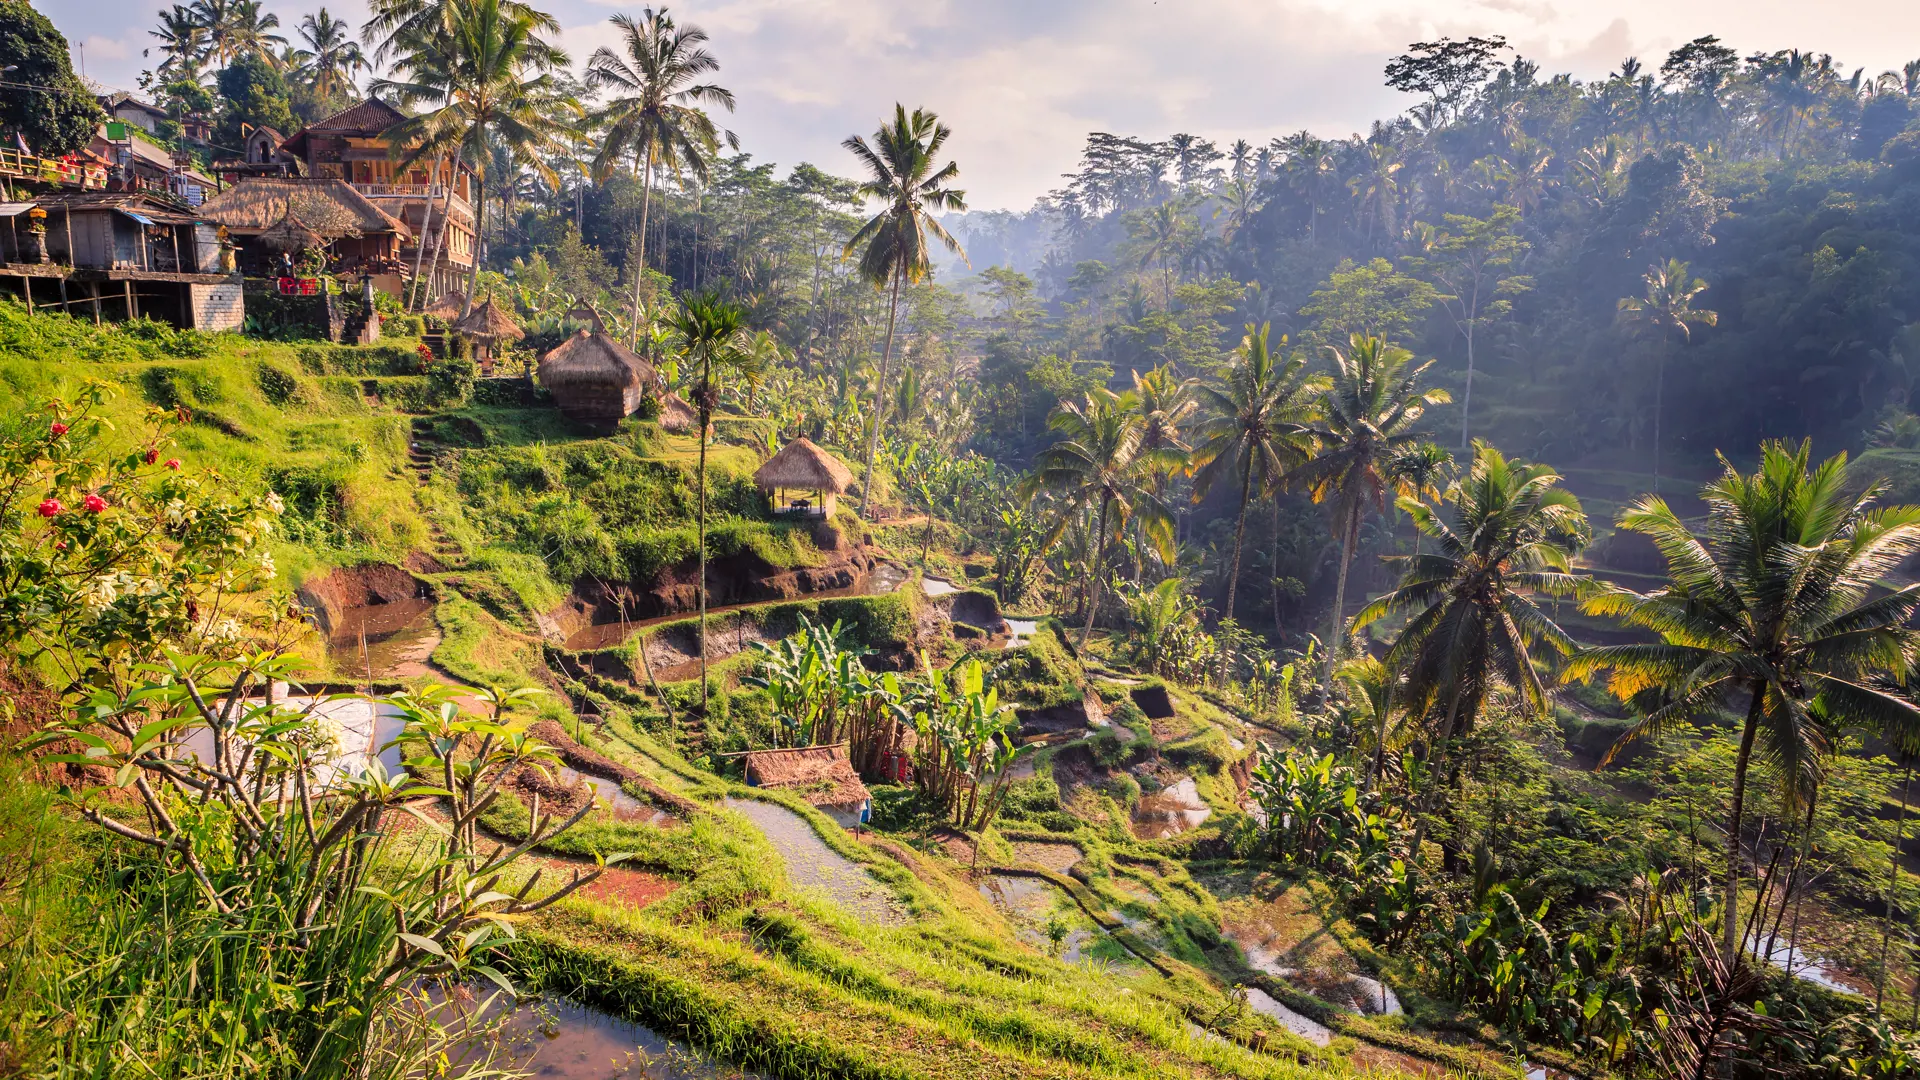 shutterstock_316997570  rice fields in the jungle and the mountain near Ubud in Bali.jpg